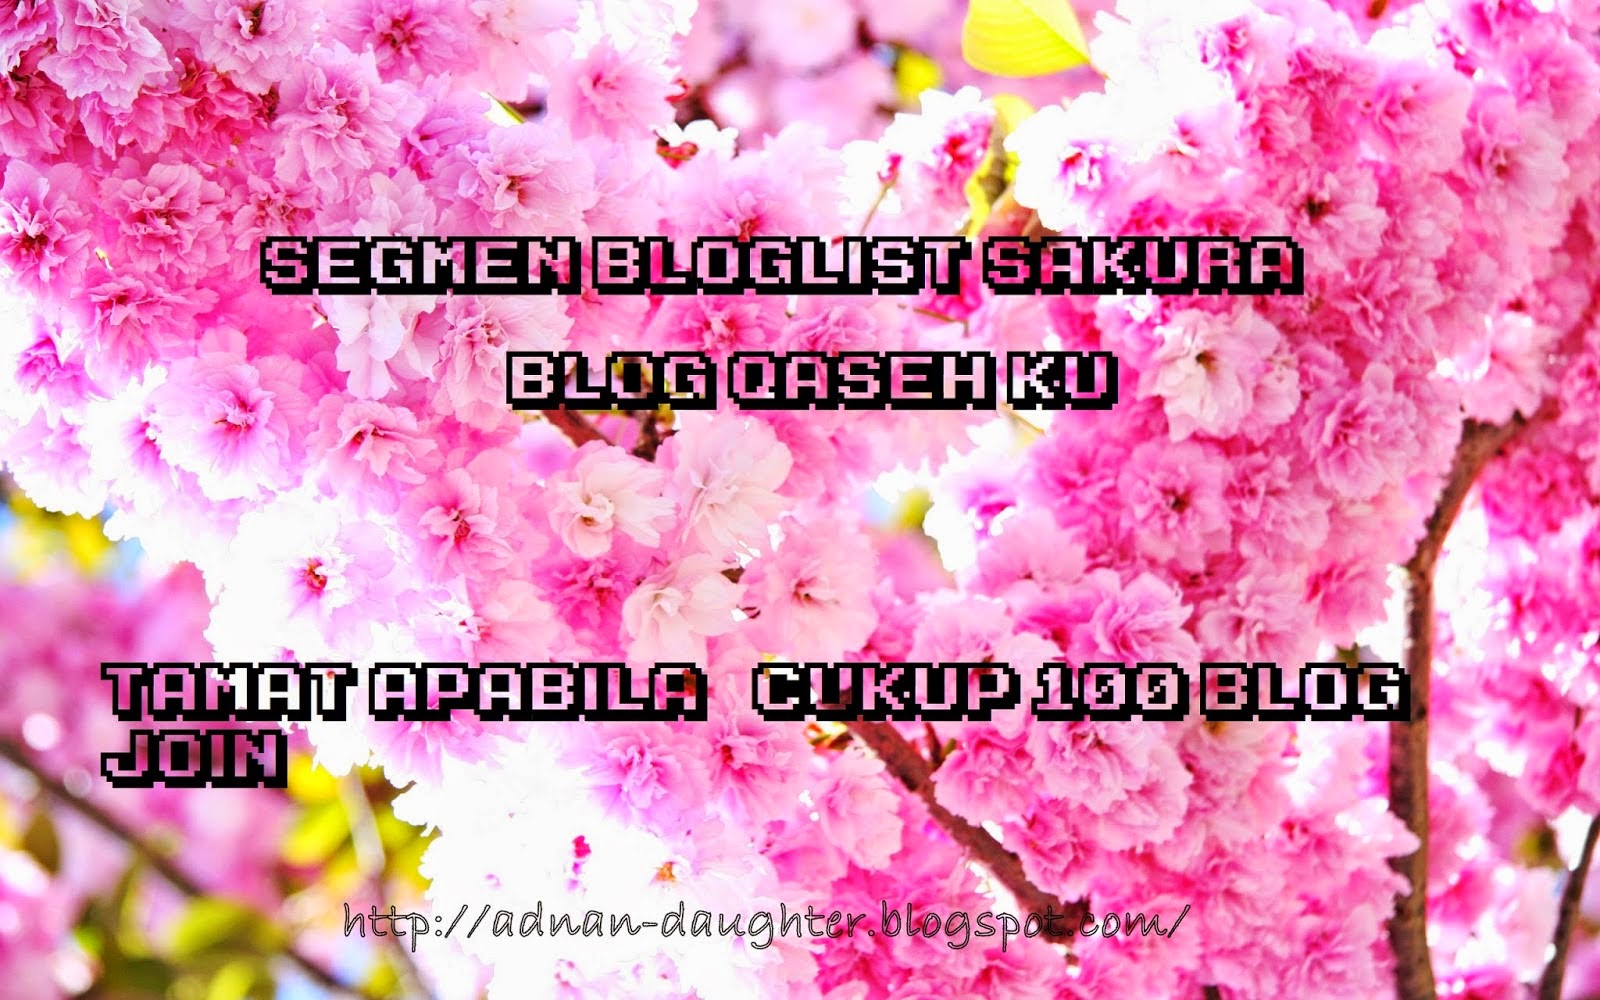 http://adnan-daughter.blogspot.com/2015/01/segmen-bloglist-sakura-blog-qaseh-ku.html